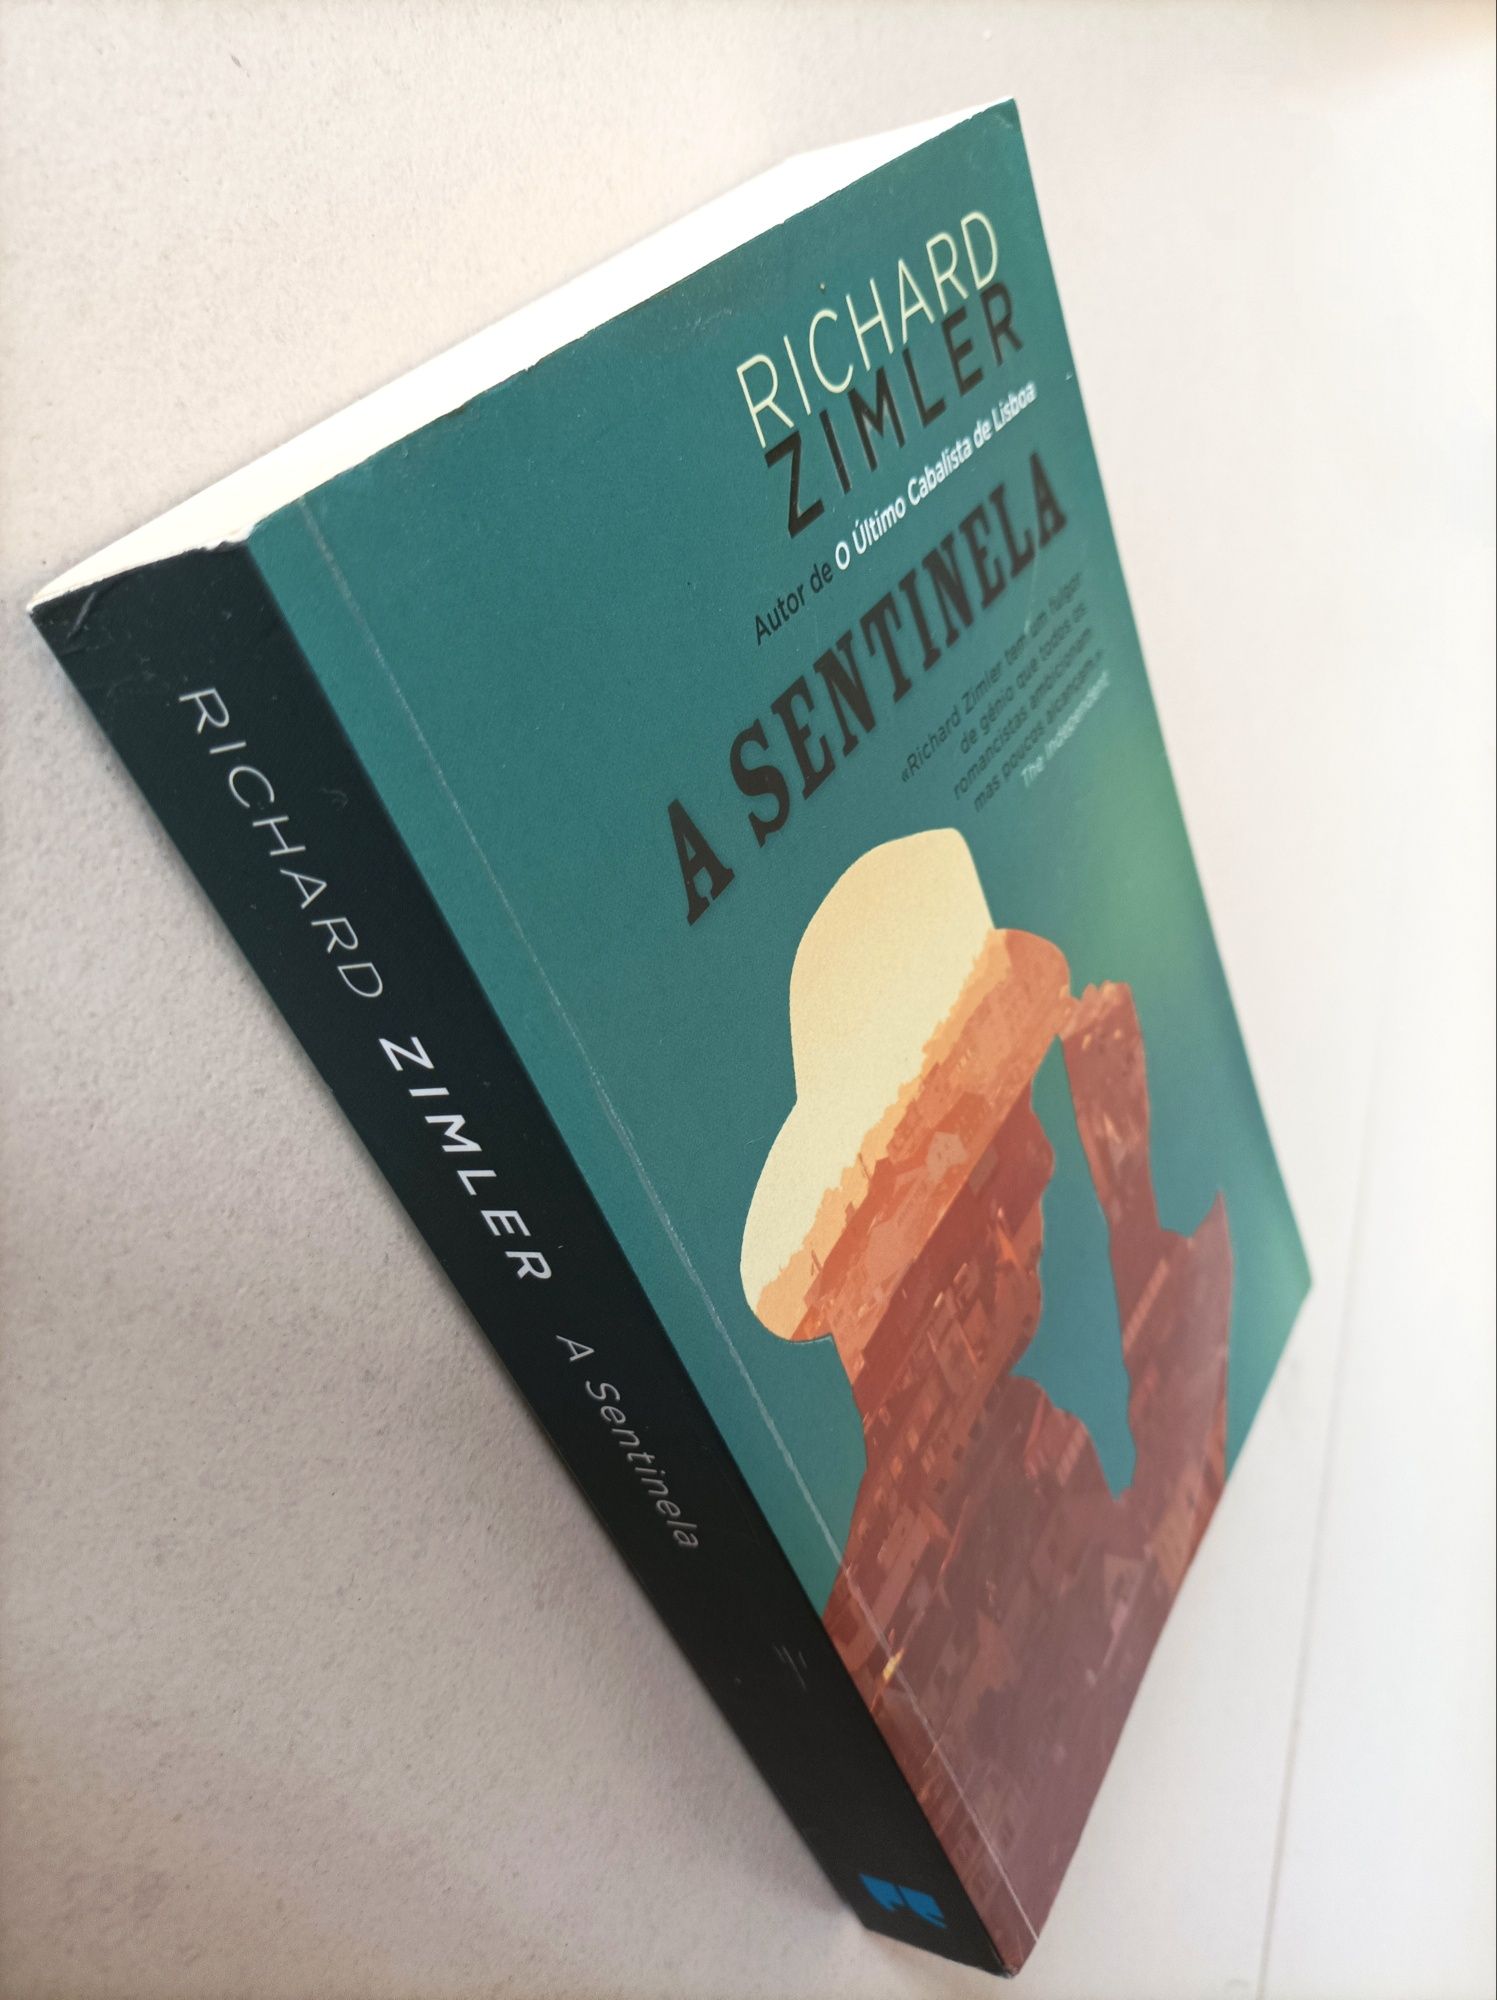 Livro: A Sentinela de Richard Zimler